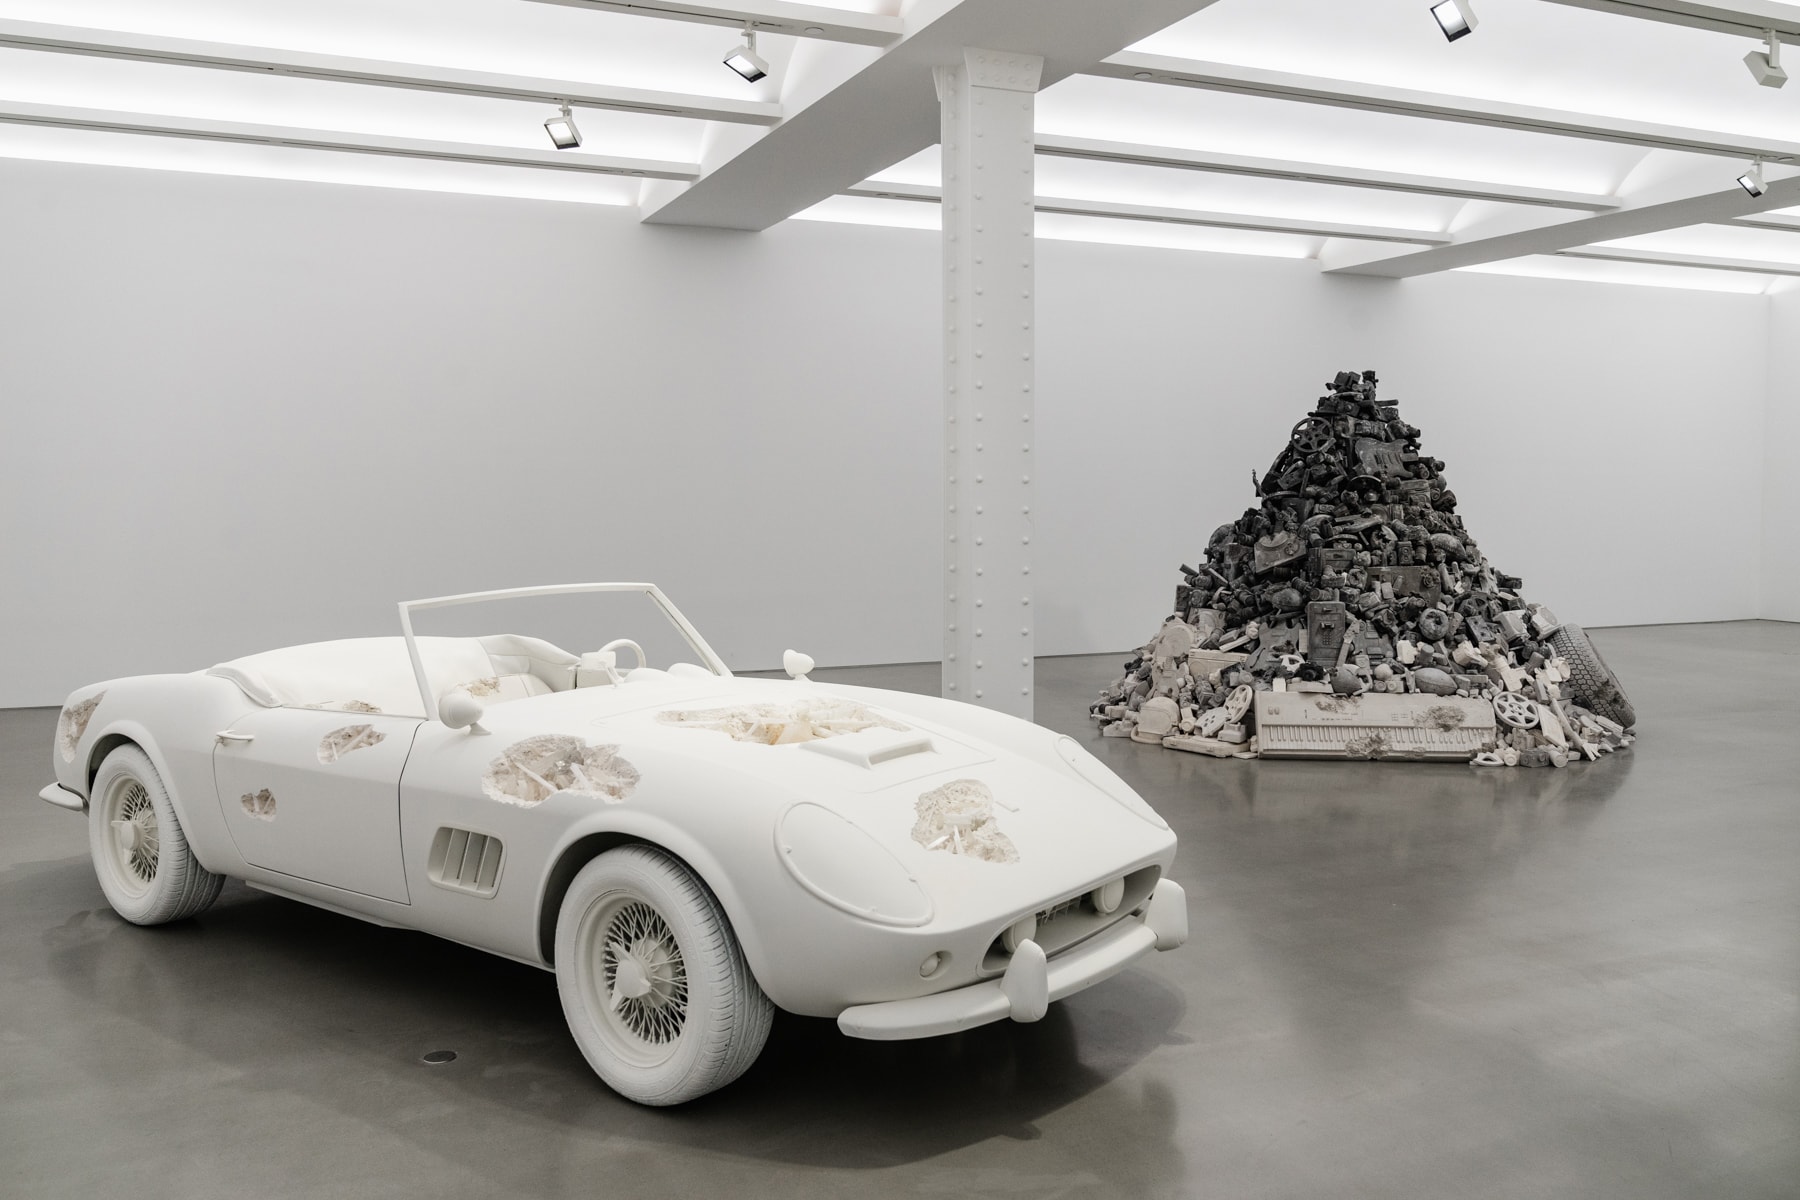 Daniel Arsham "3018" Galerie Perrotin Exhibition Ferrari 250GT California Spyder